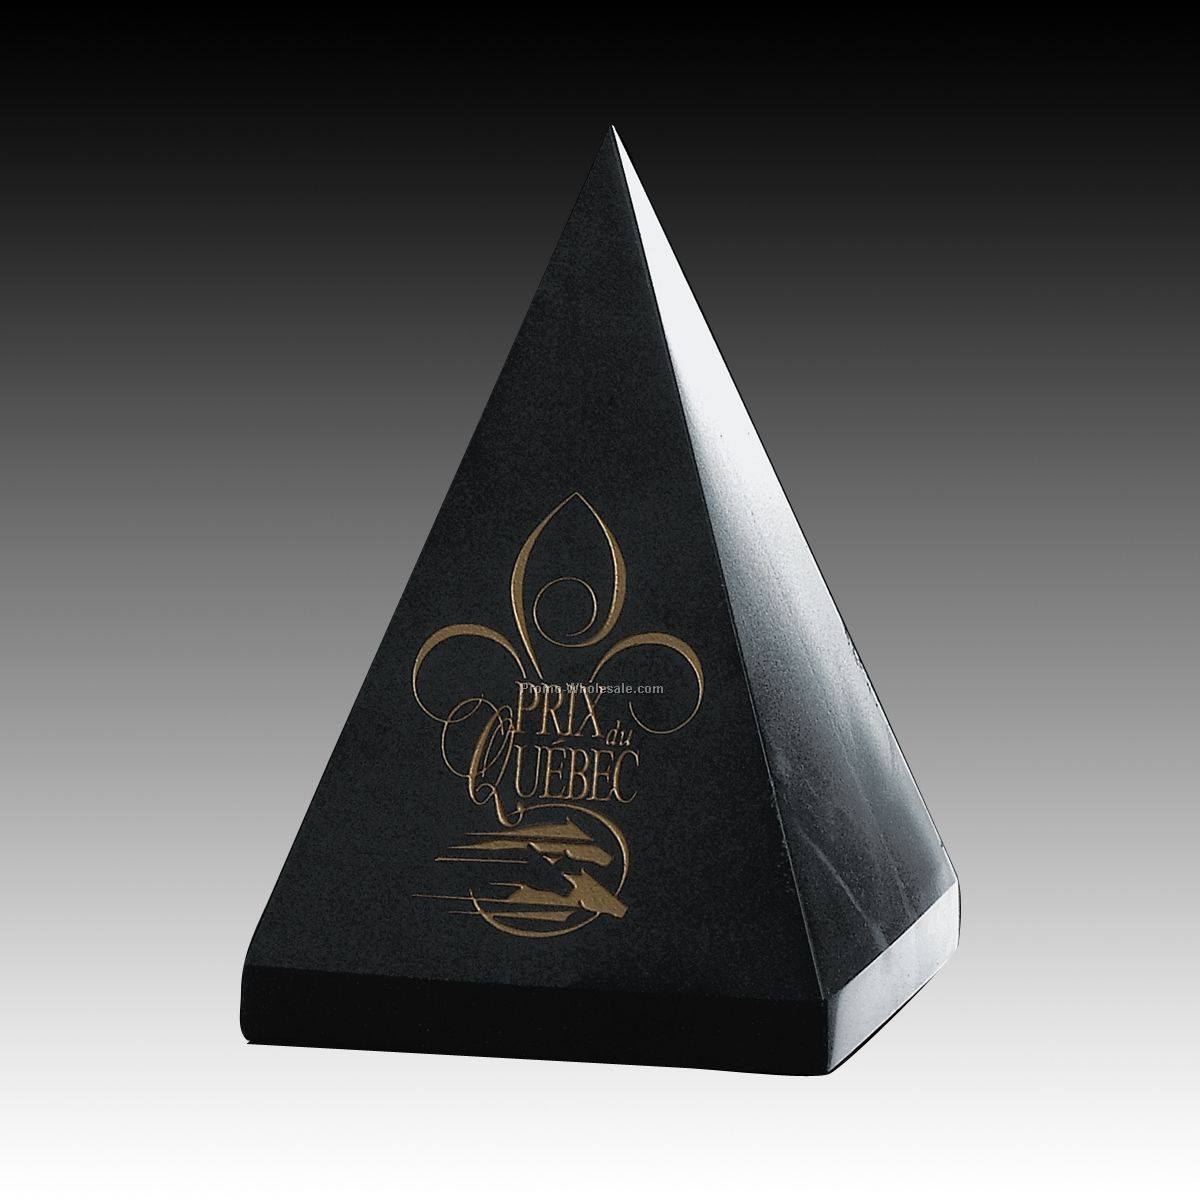 4"x6" Marble Pyramid Award